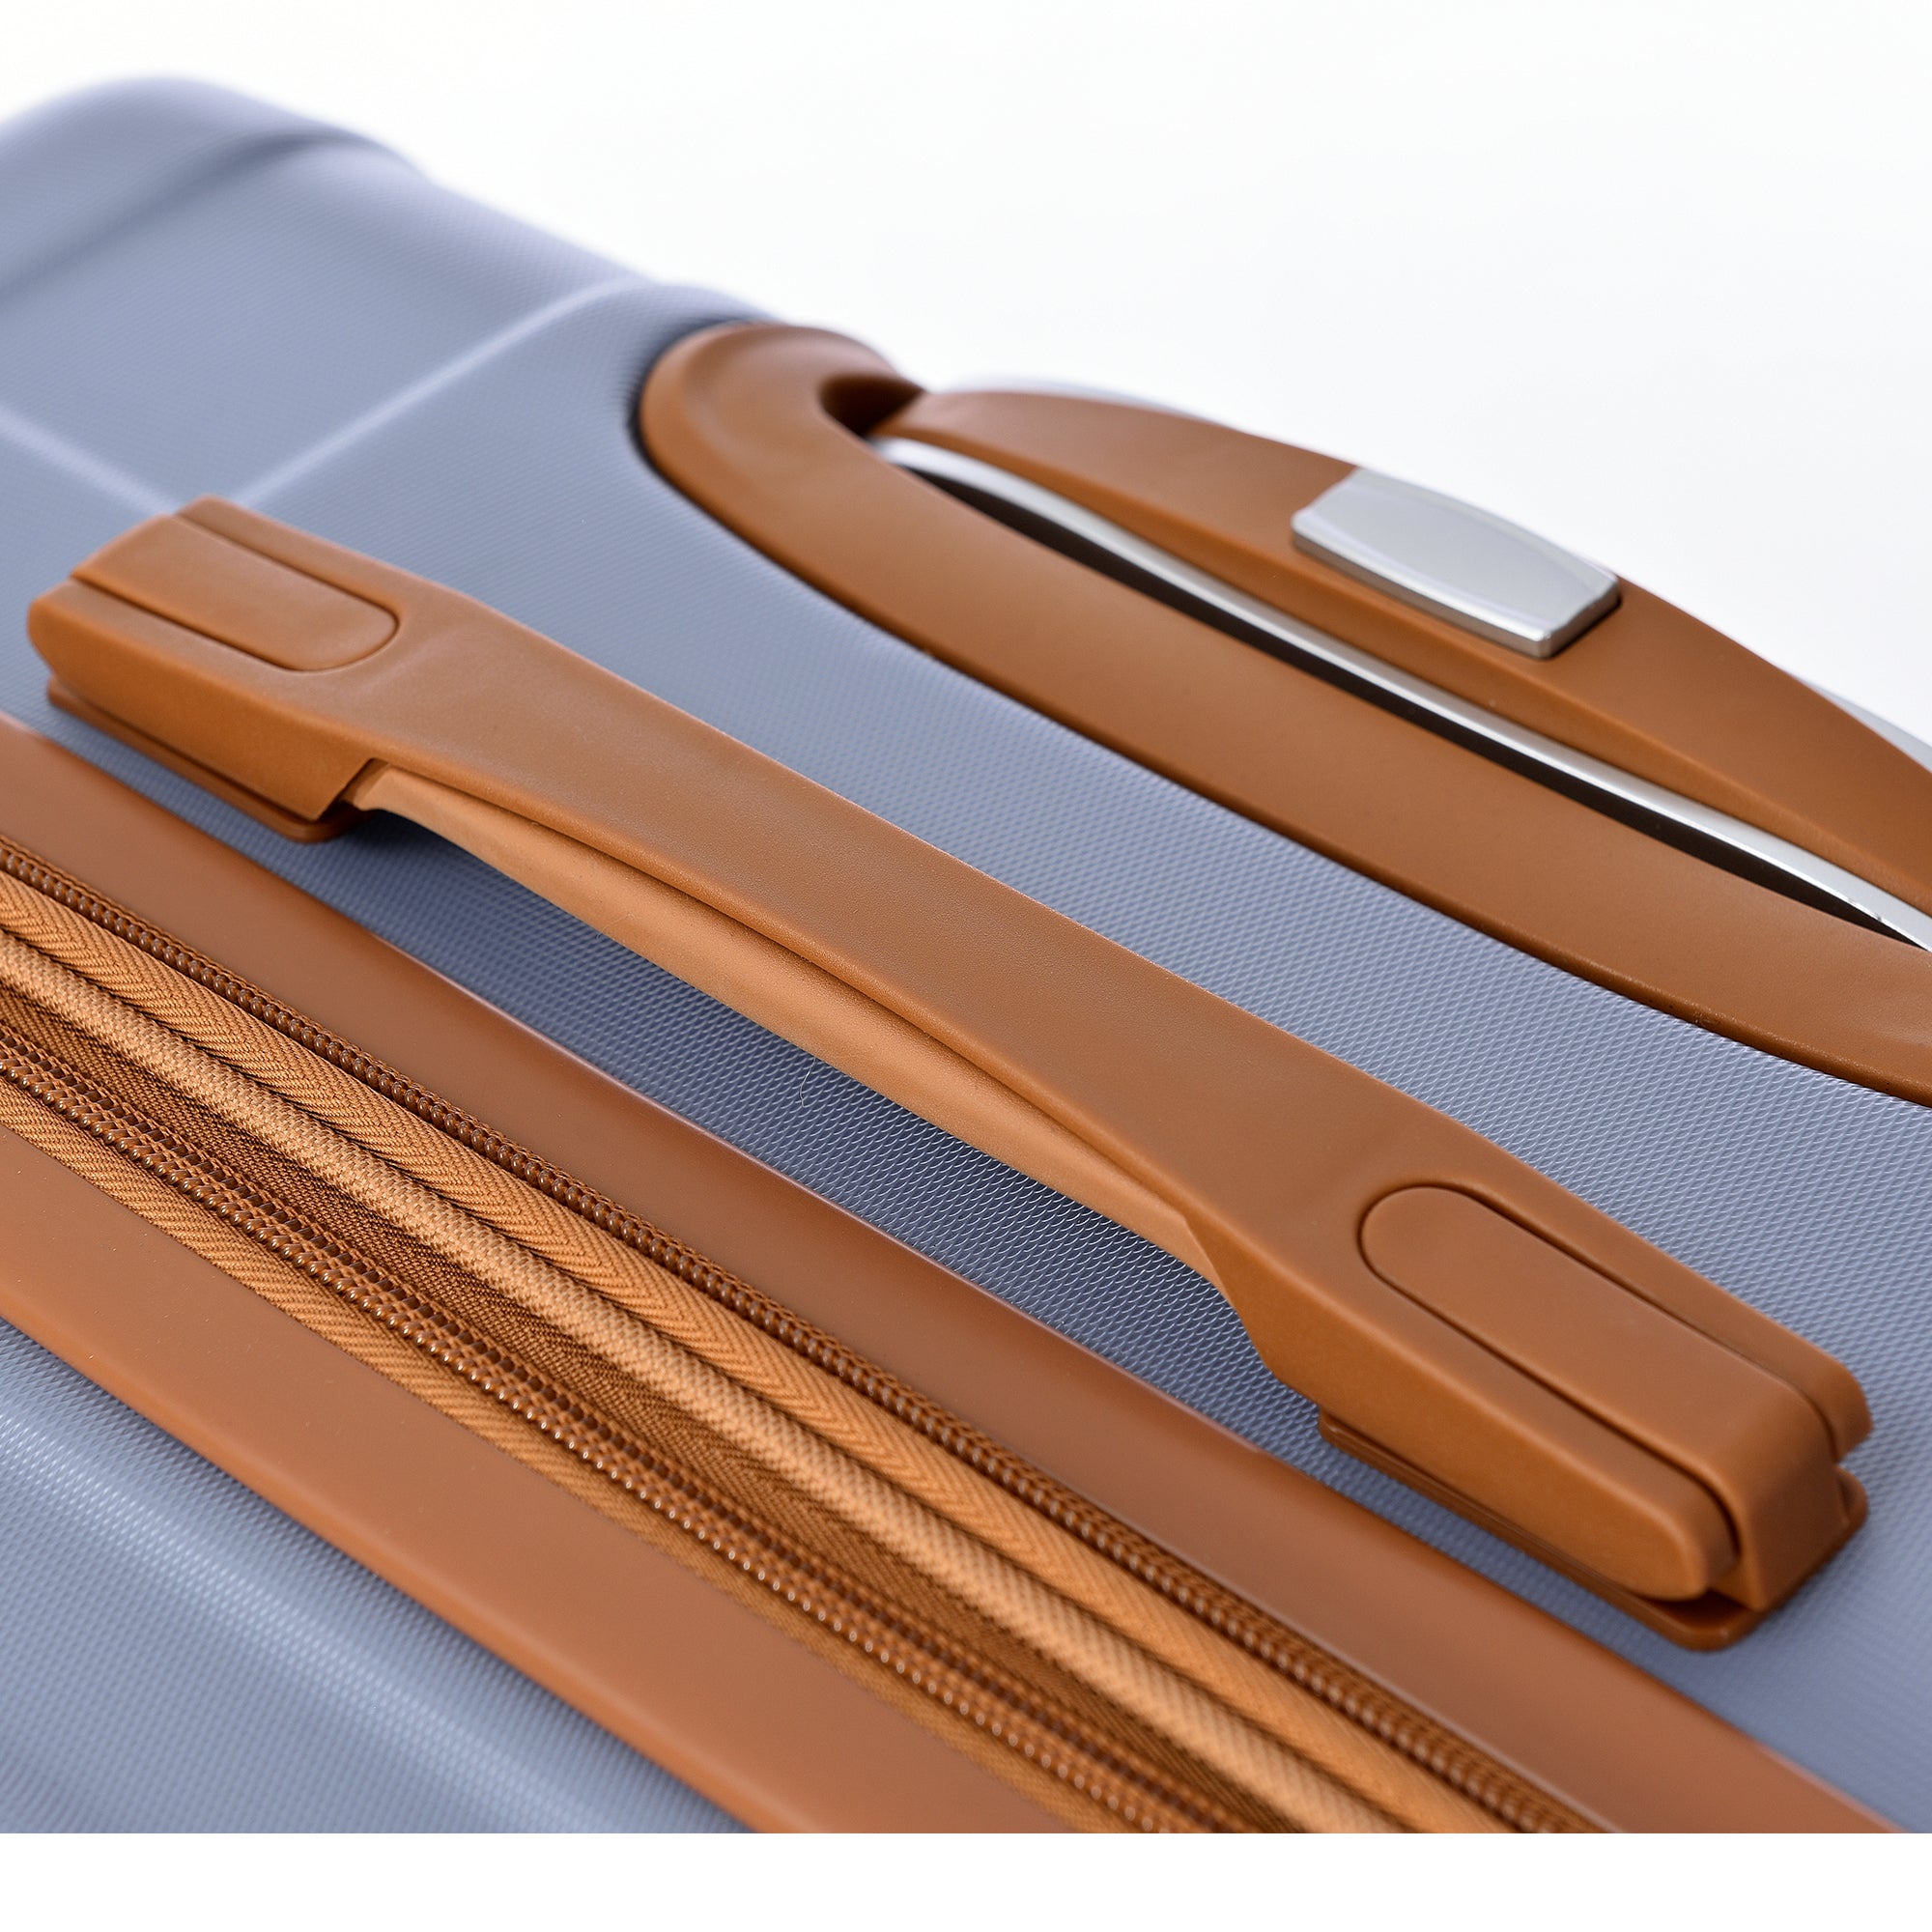 Luggage Sets Model Expandable ABS Hardshell 3pcs blue-abs